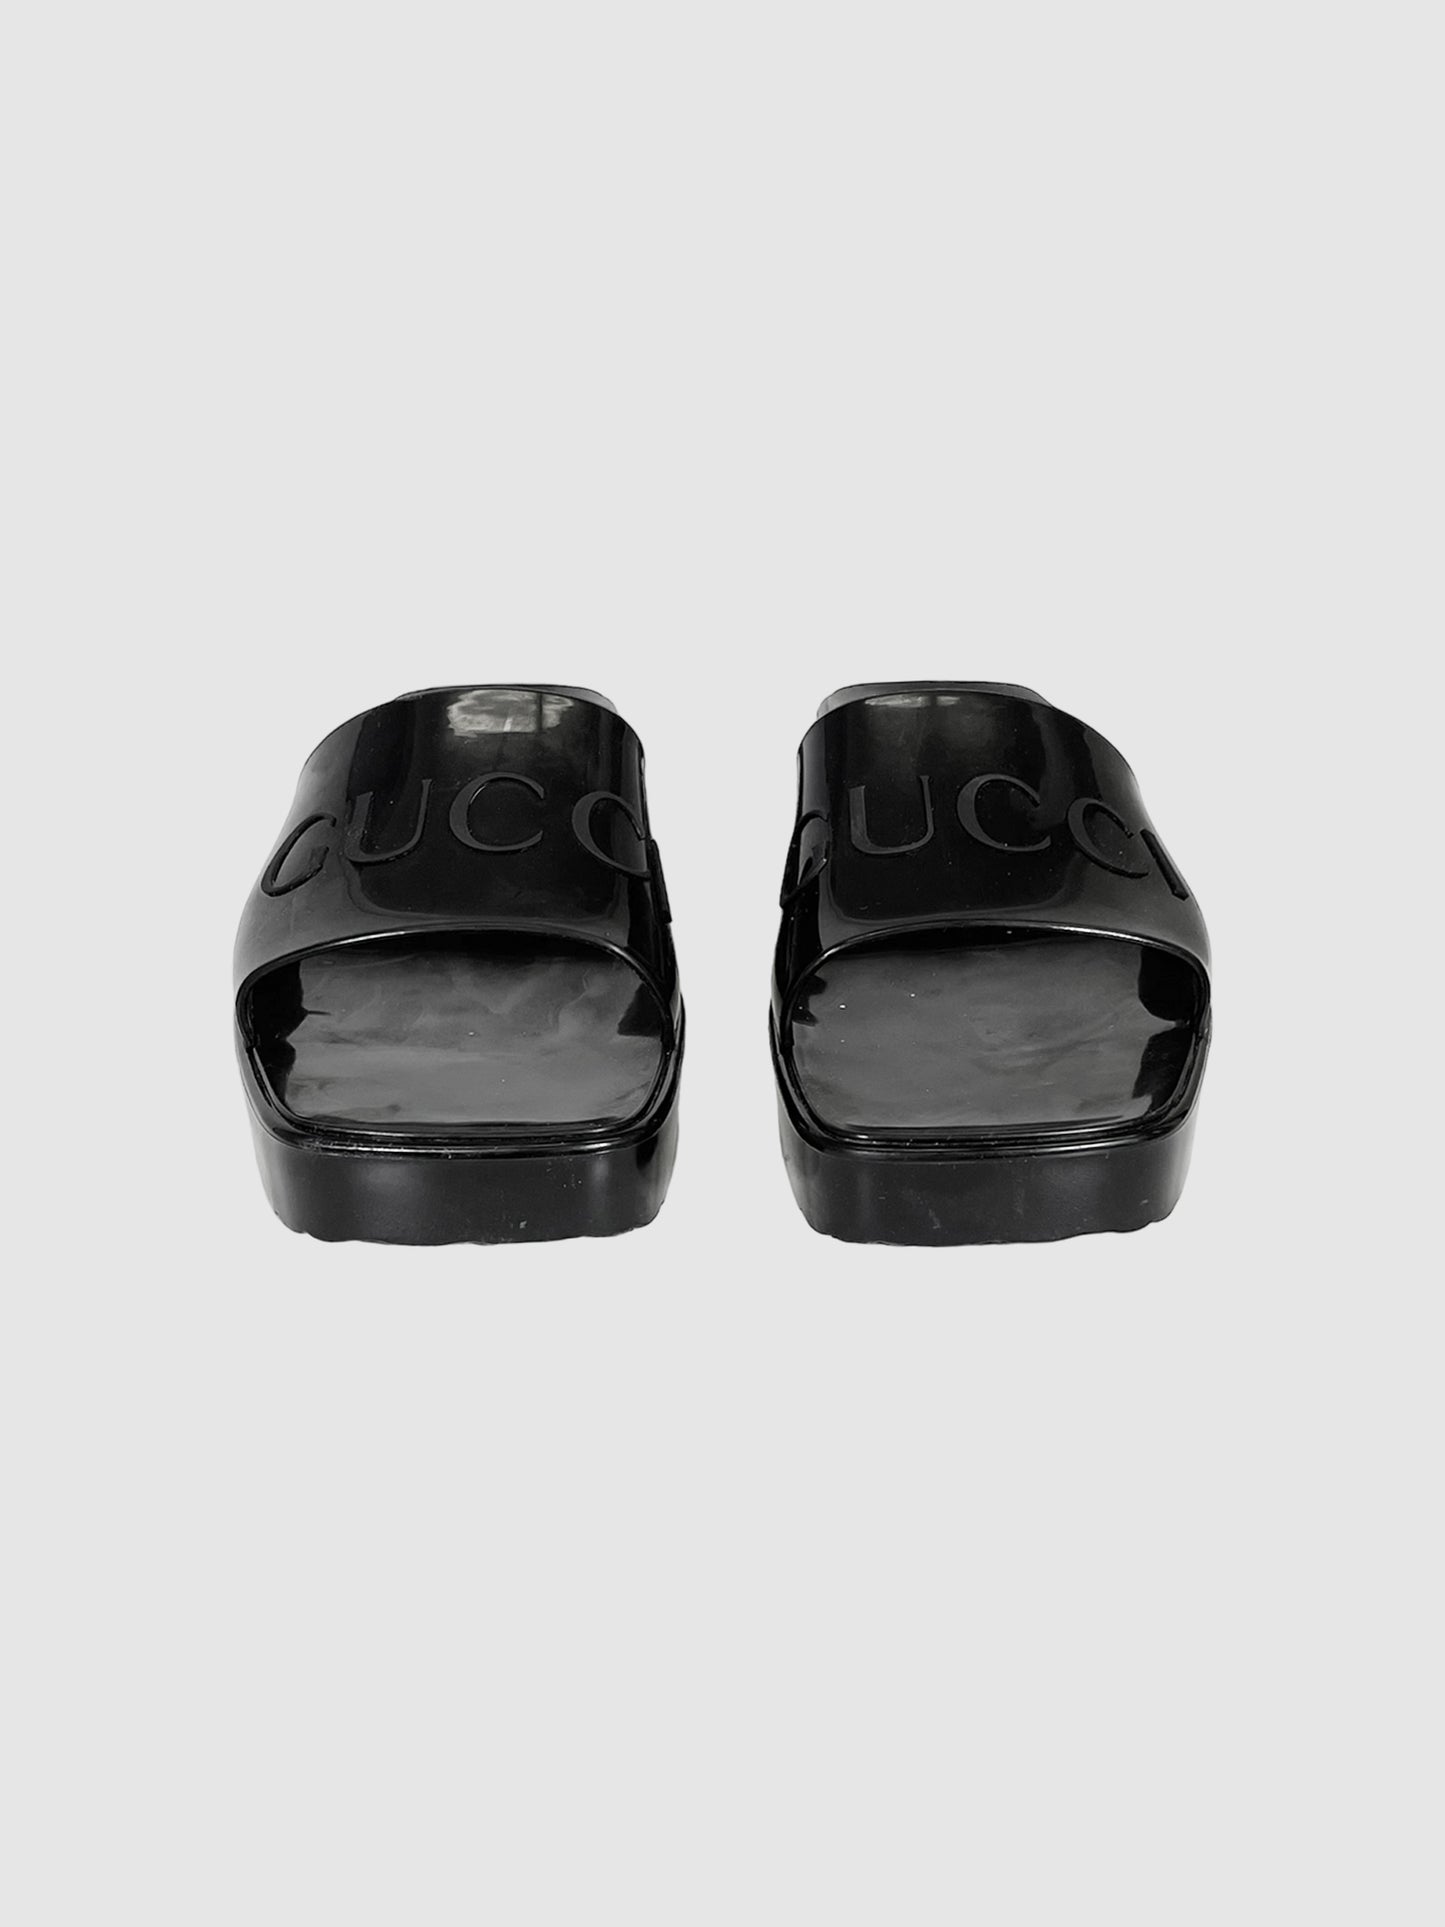 Gucci Rubber Block Heel Sandal - Size 38